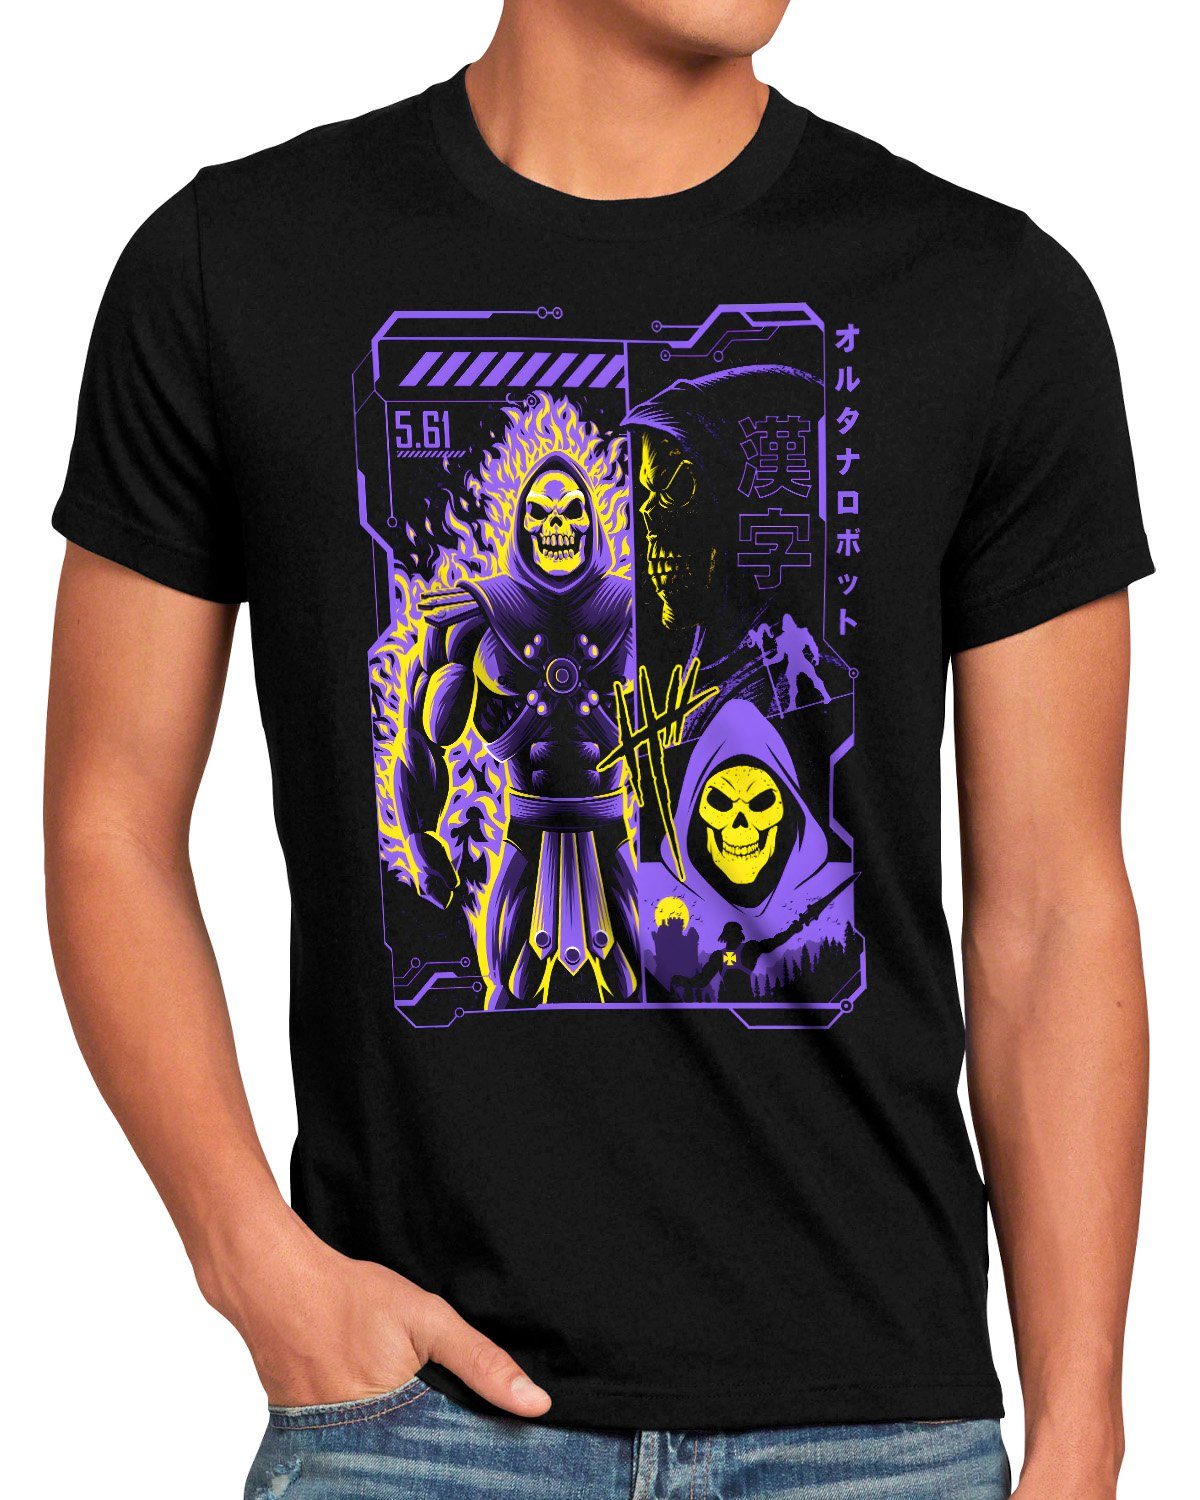 Print-Shirt the Lord style3 masters skeletor Herren of T-Shirt he-man universe Skeleton